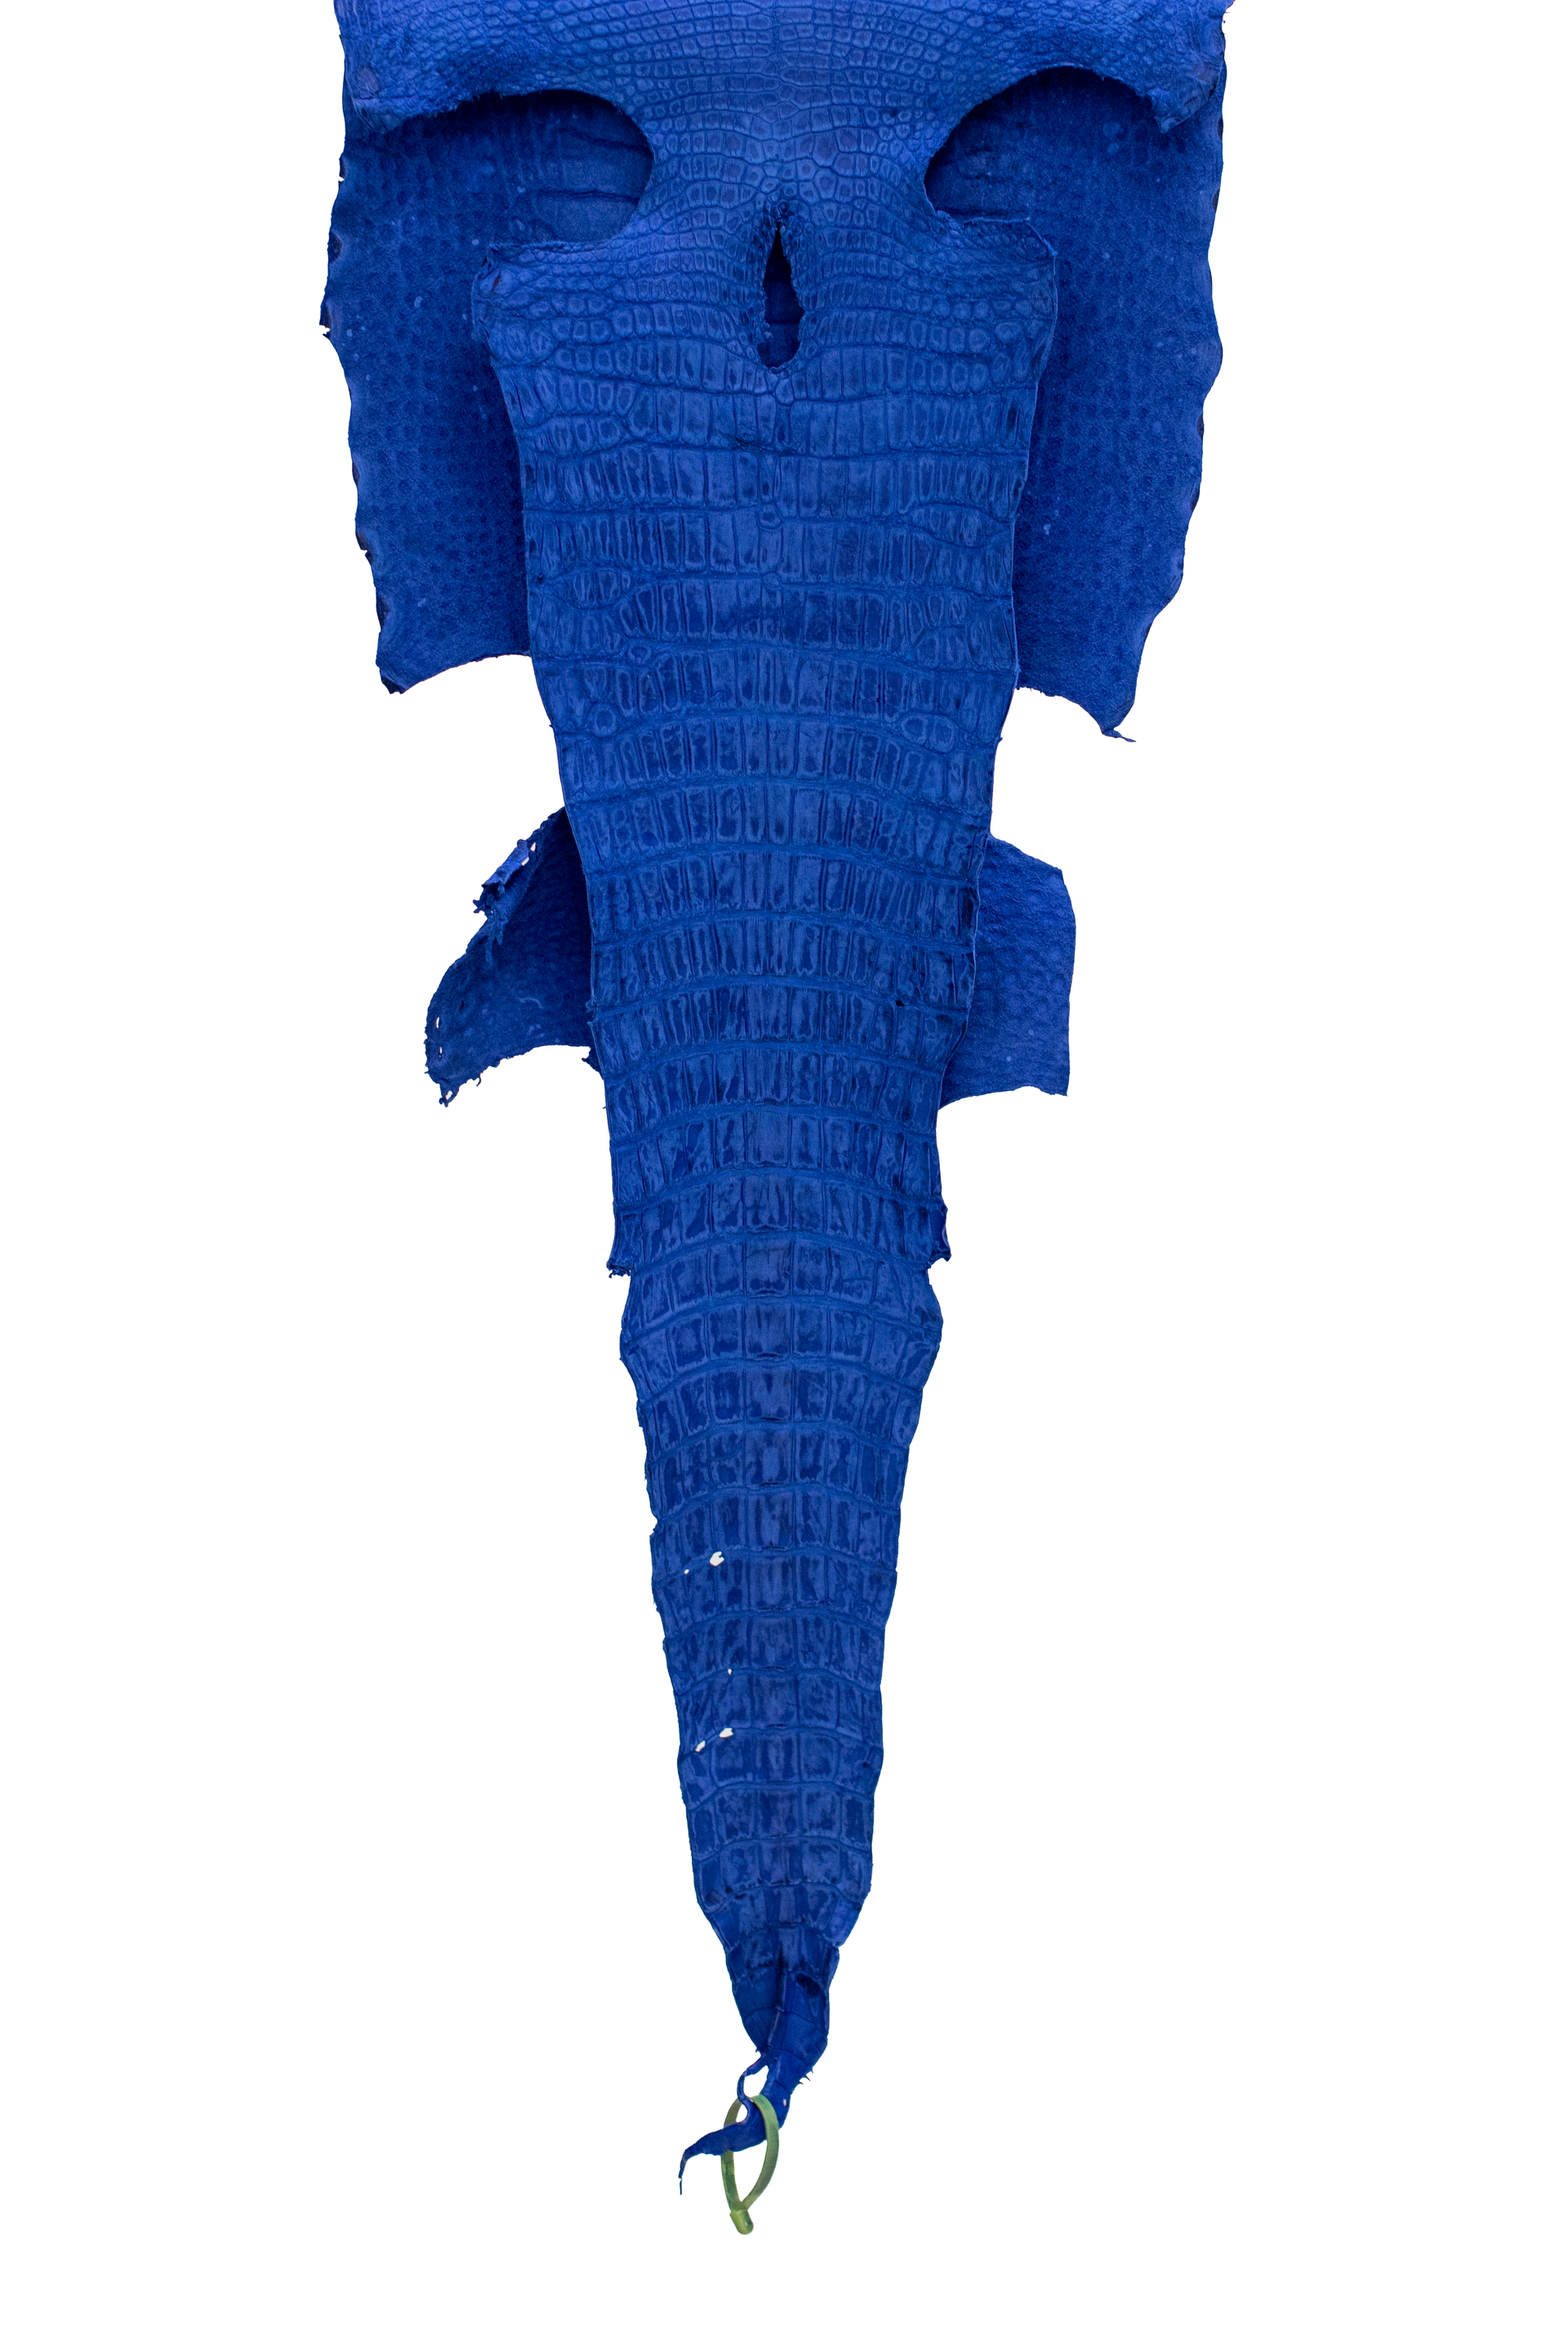 48 cm Grade 3/4 Navy Blue Nubuck Wild American Alligator Leather - Tag: LA22-0004564